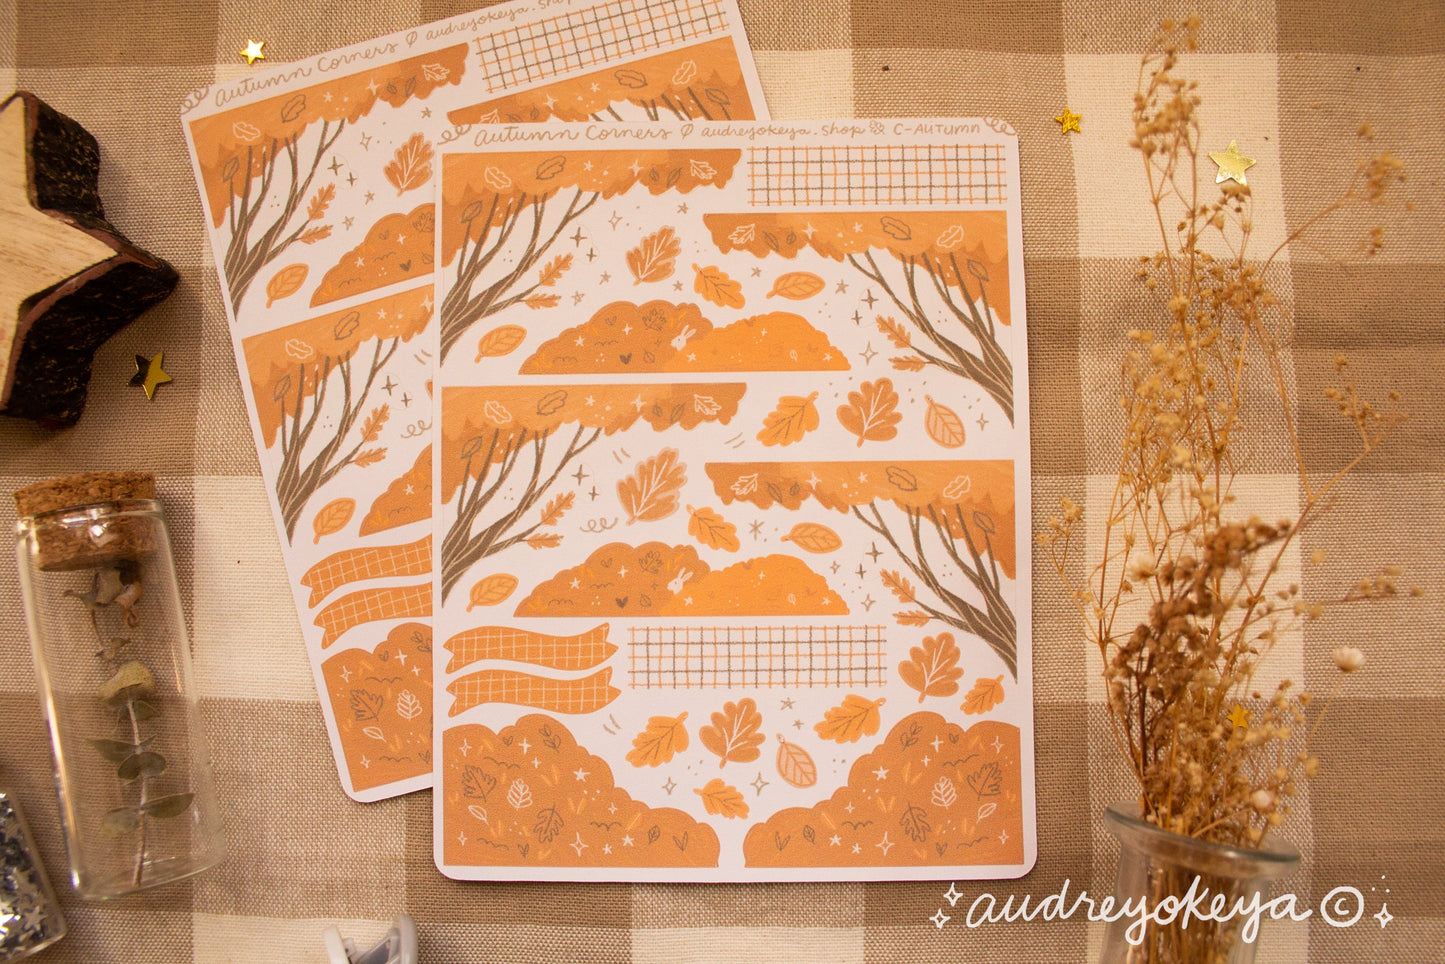 Autumn Corner Sticker Sheet | Grove Corner Sticker Sheet